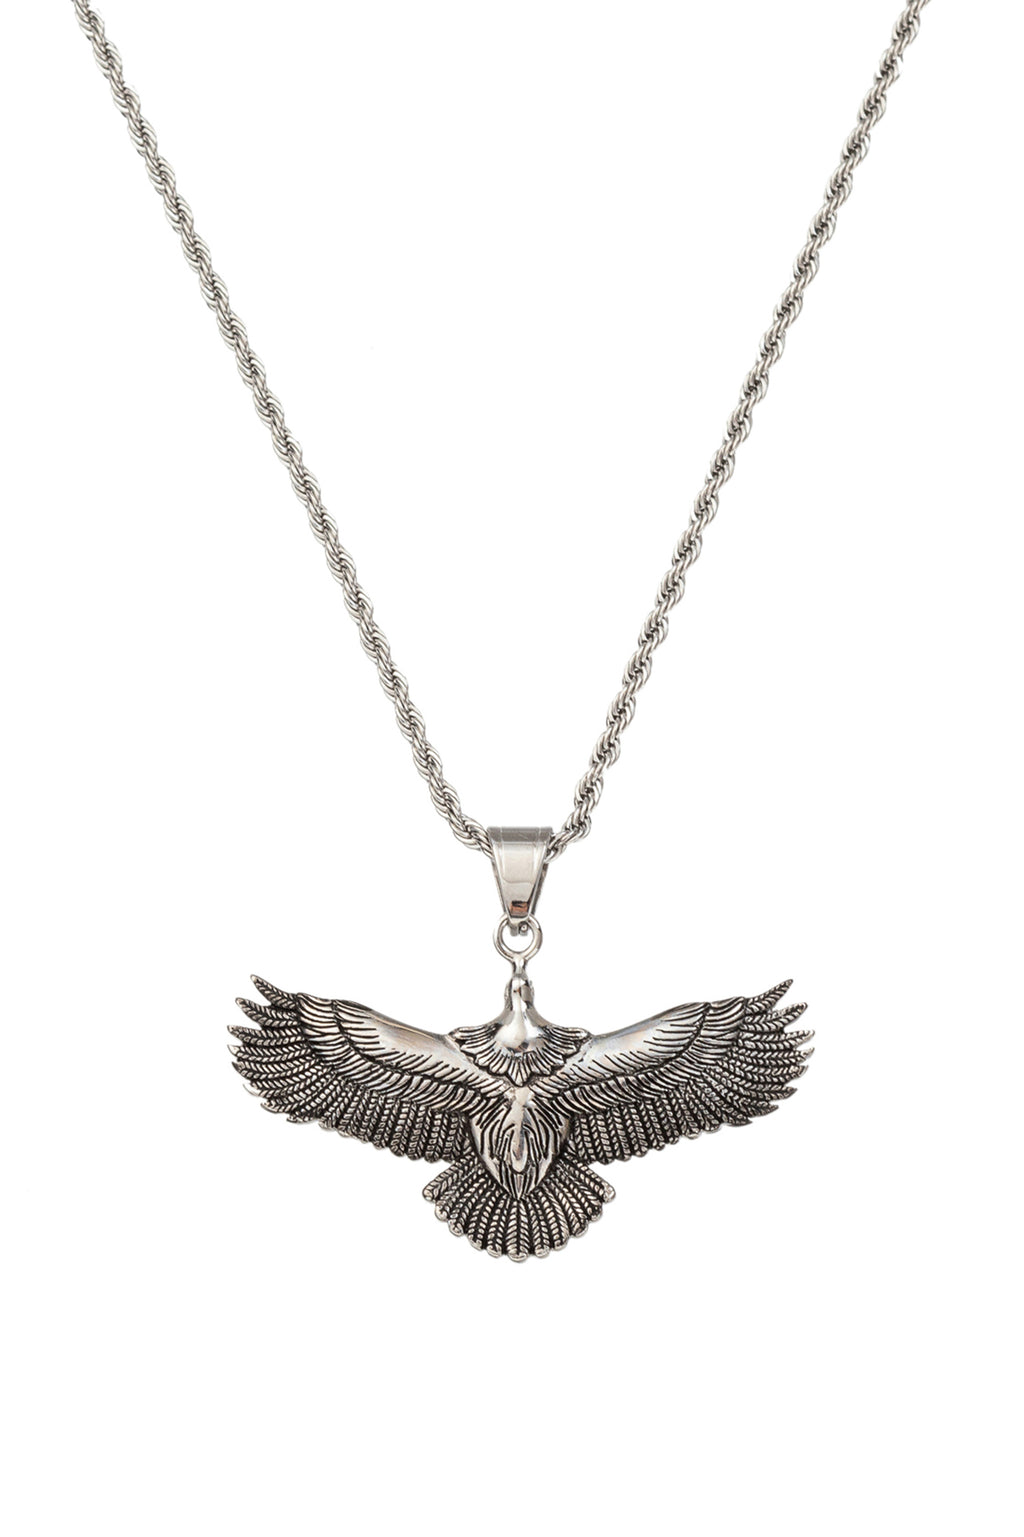 Silver tone titanium flying eagle pendant necklace.